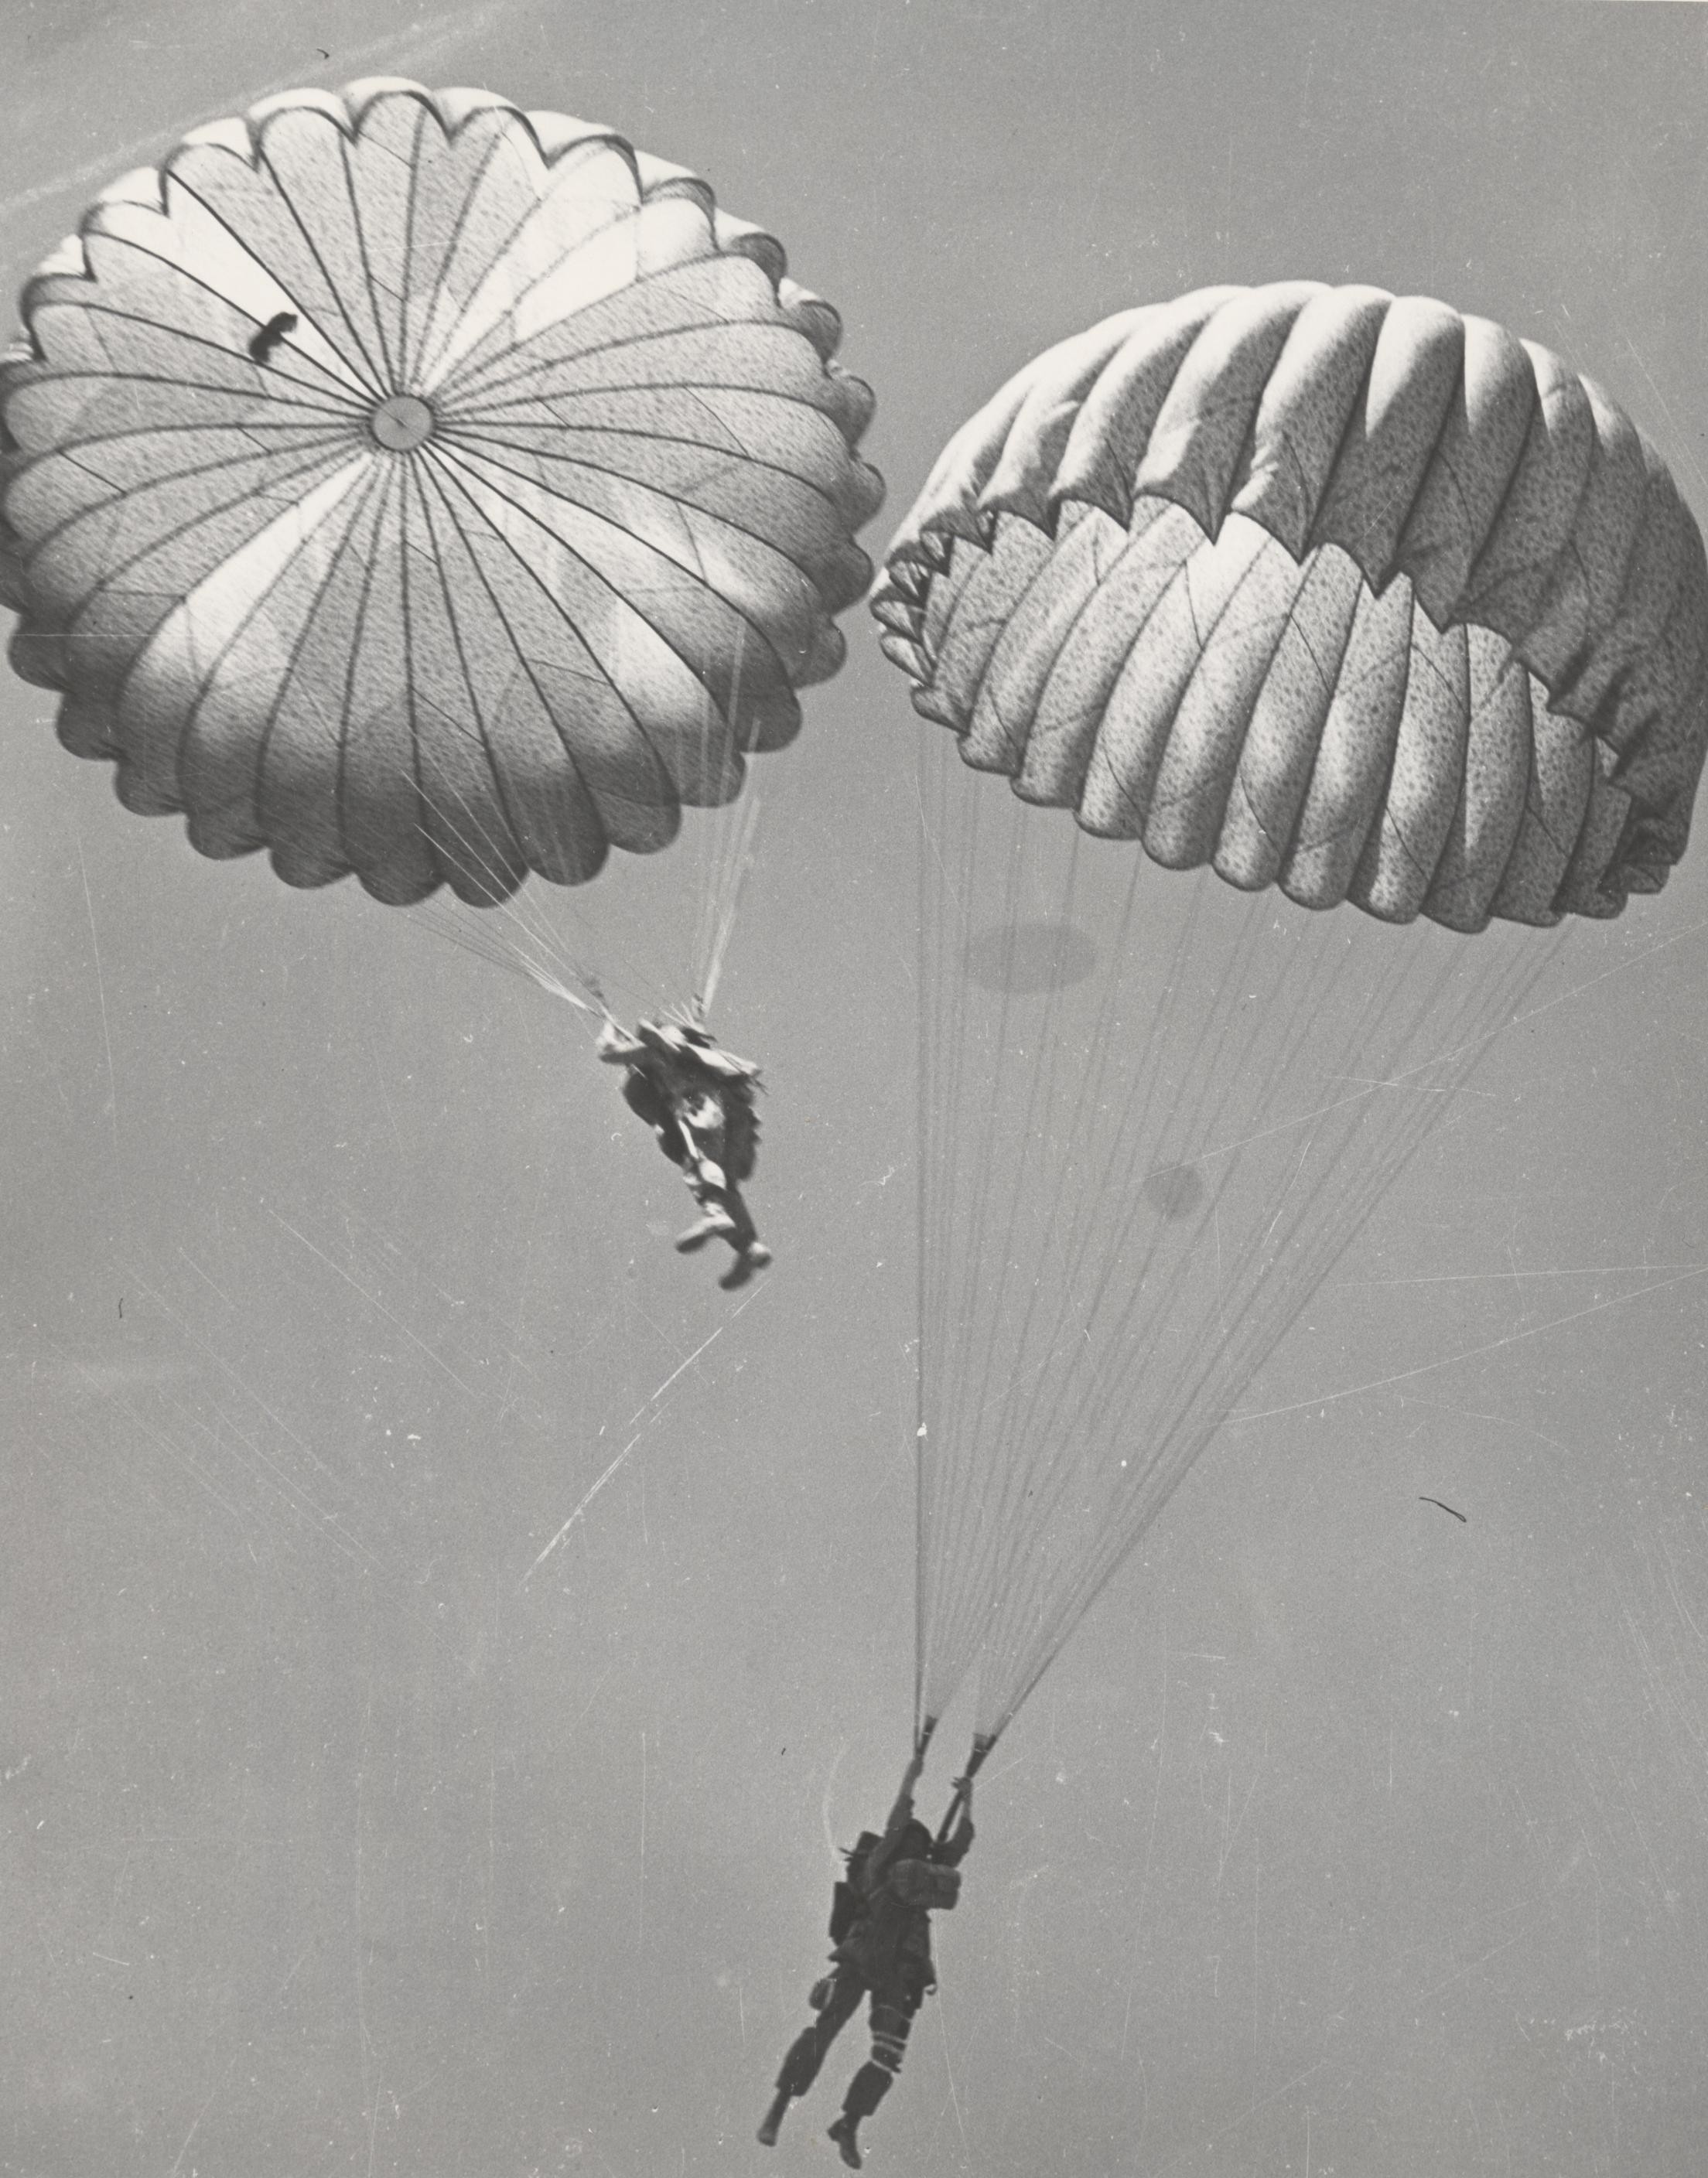 World War II American Paratroopers